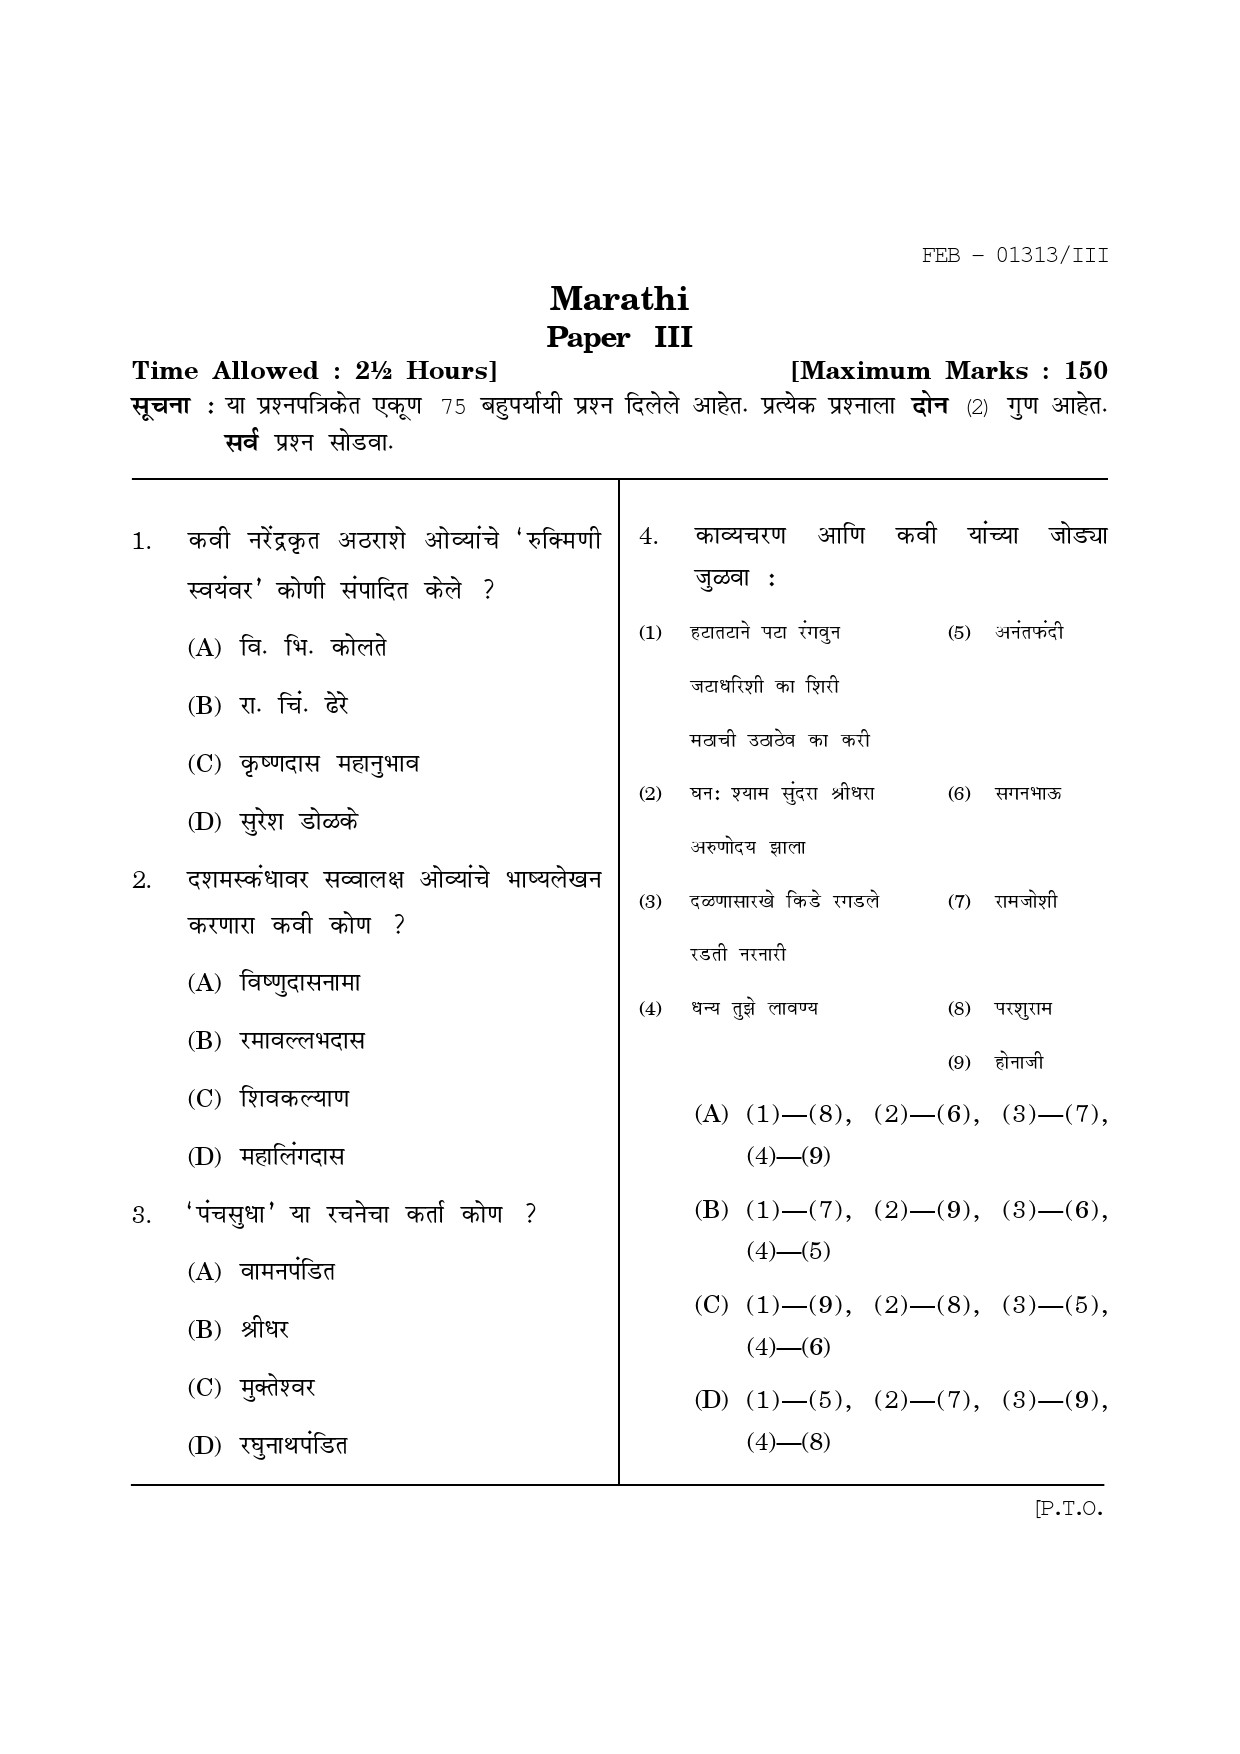 Maharashtra SET Marathi Question Paper III February 2013 1